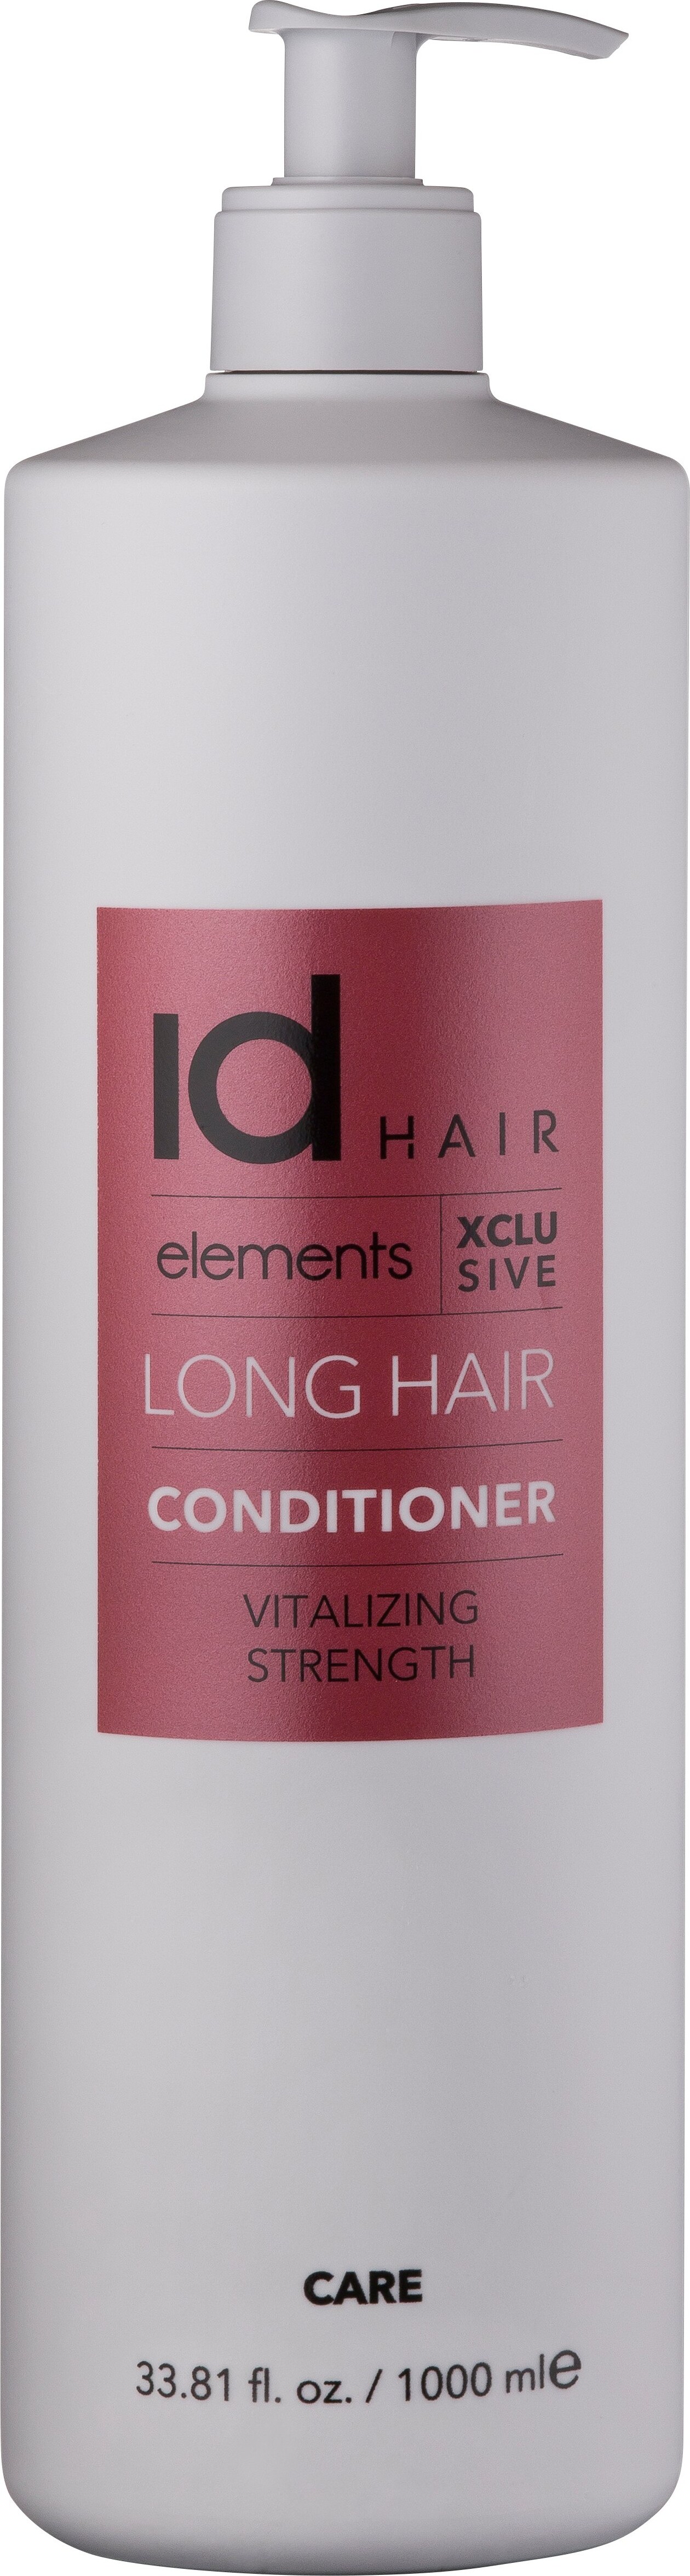 Billede af Id Hair - Elements Xclusive Long Hair Conditioner 1000 Ml hos Gucca.dk